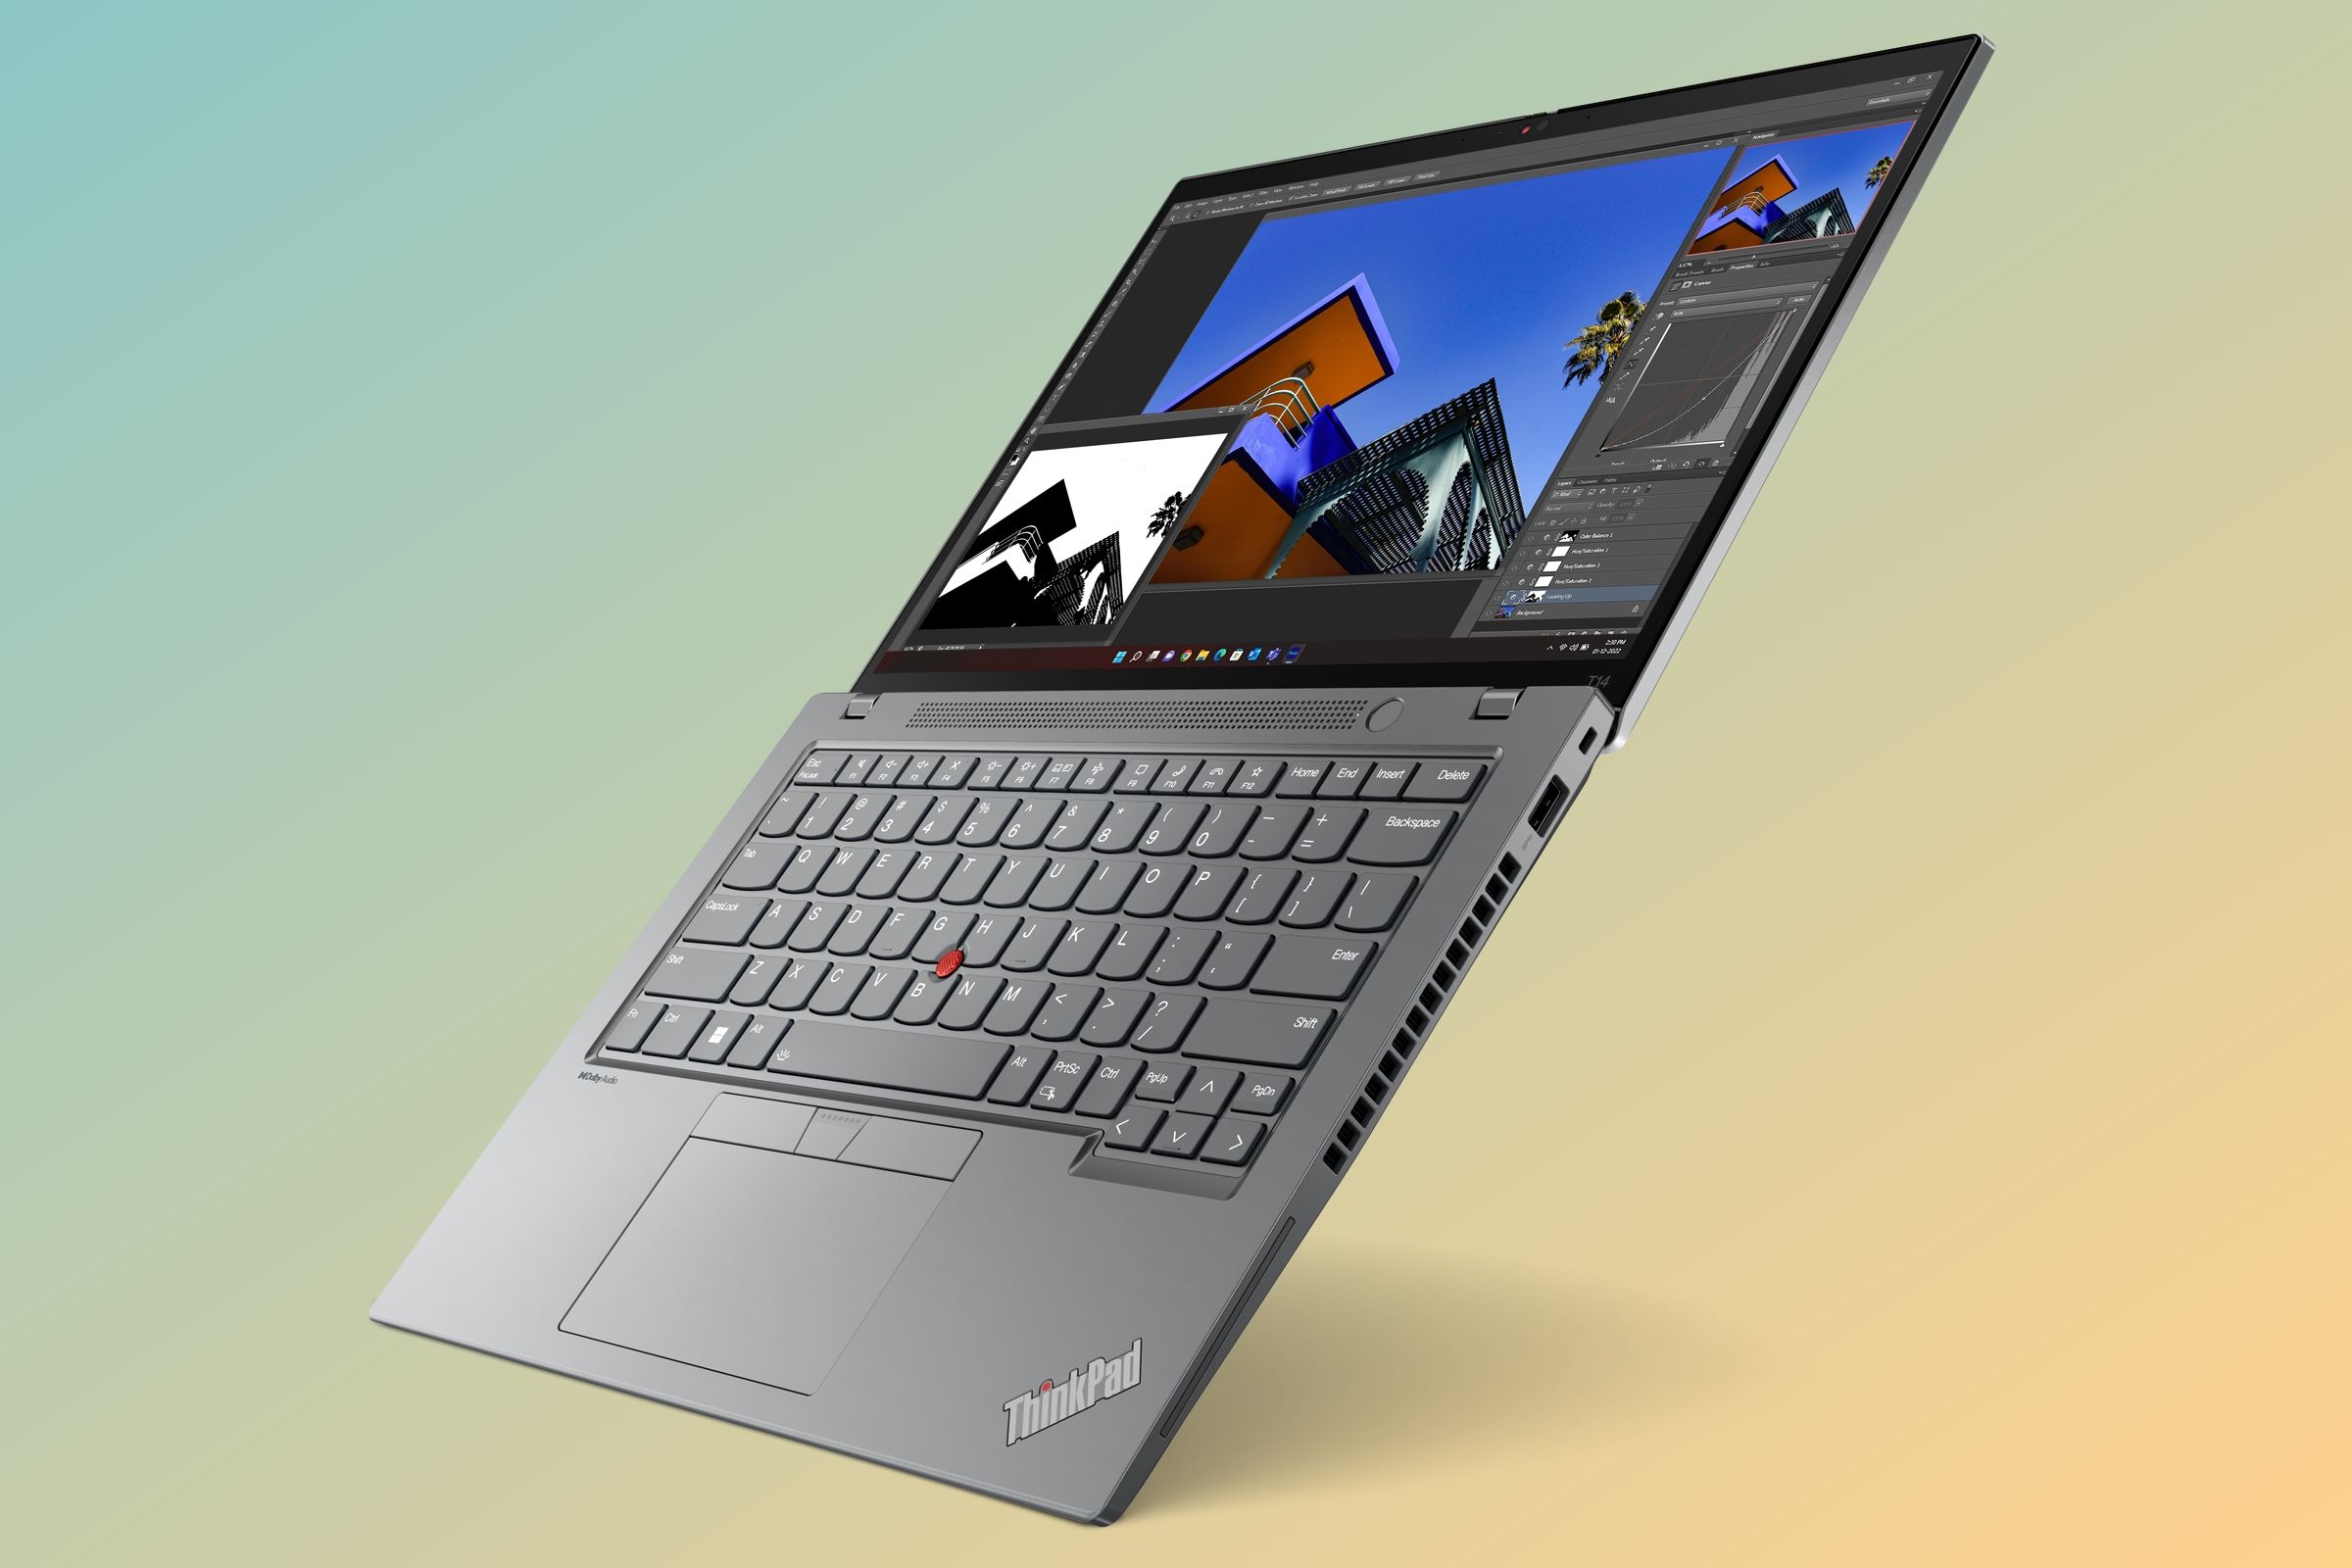 Lenovo ThinkPad T14 Gen 4 angled view Grey blue and orange